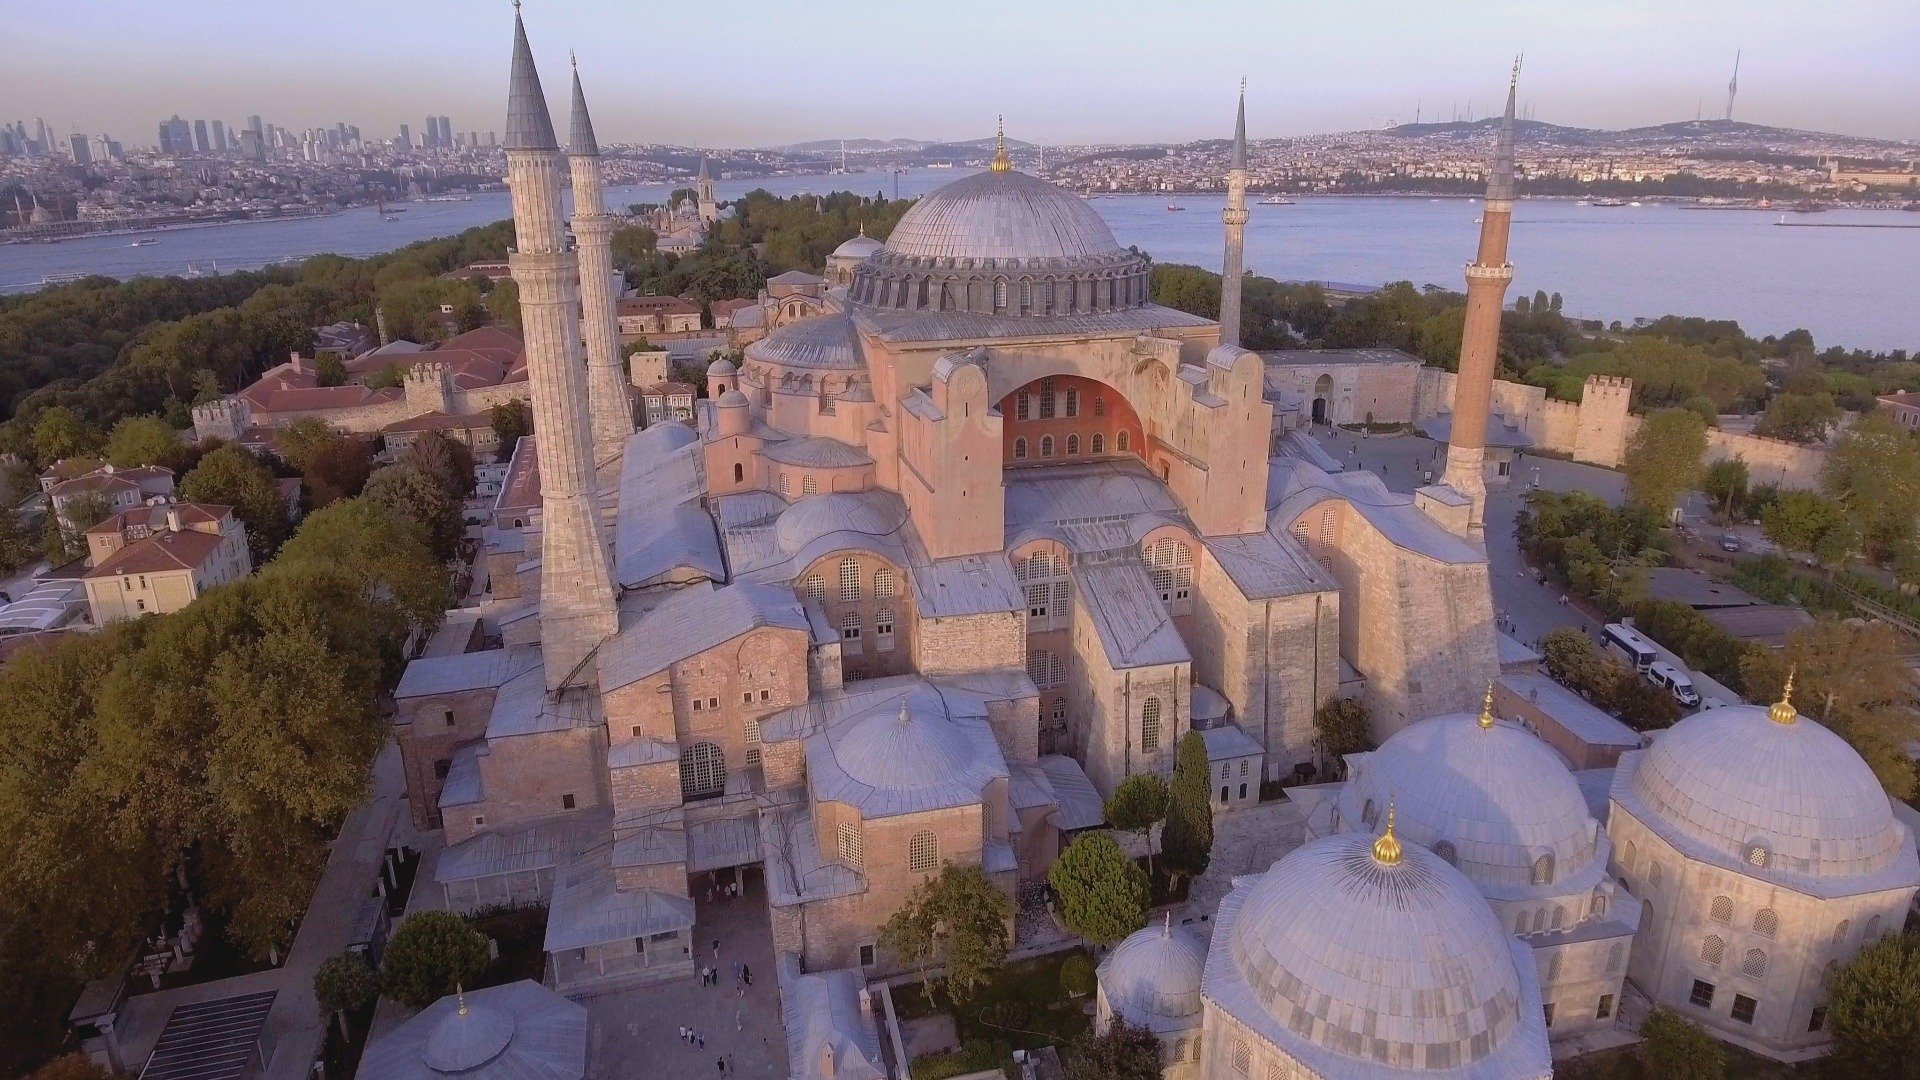 3. Hagia Sophia